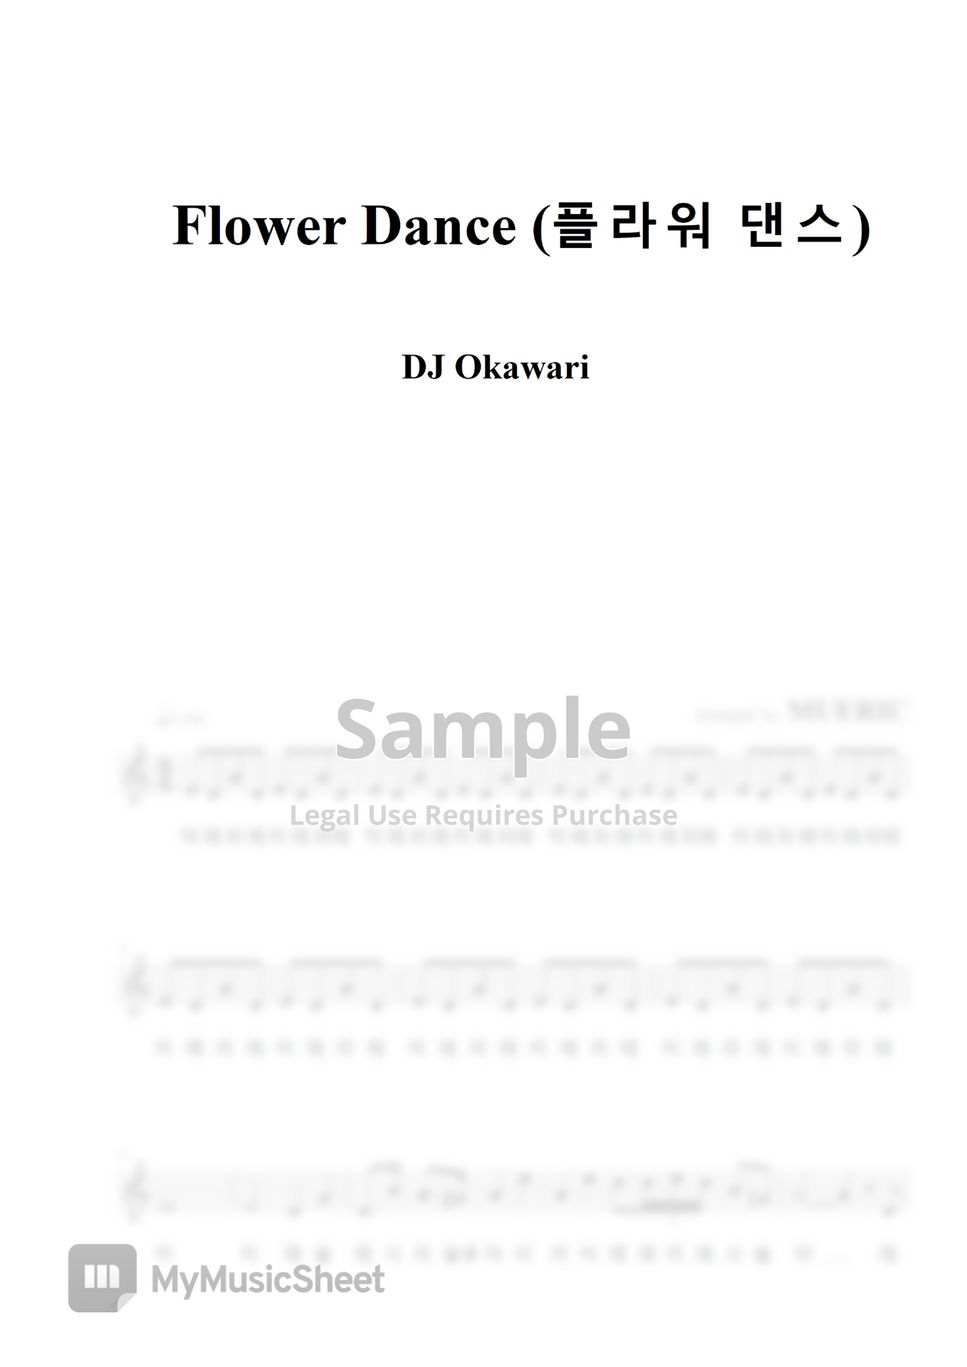 DJ Okawari - Flower Dance (For Recorder) by MUERIC